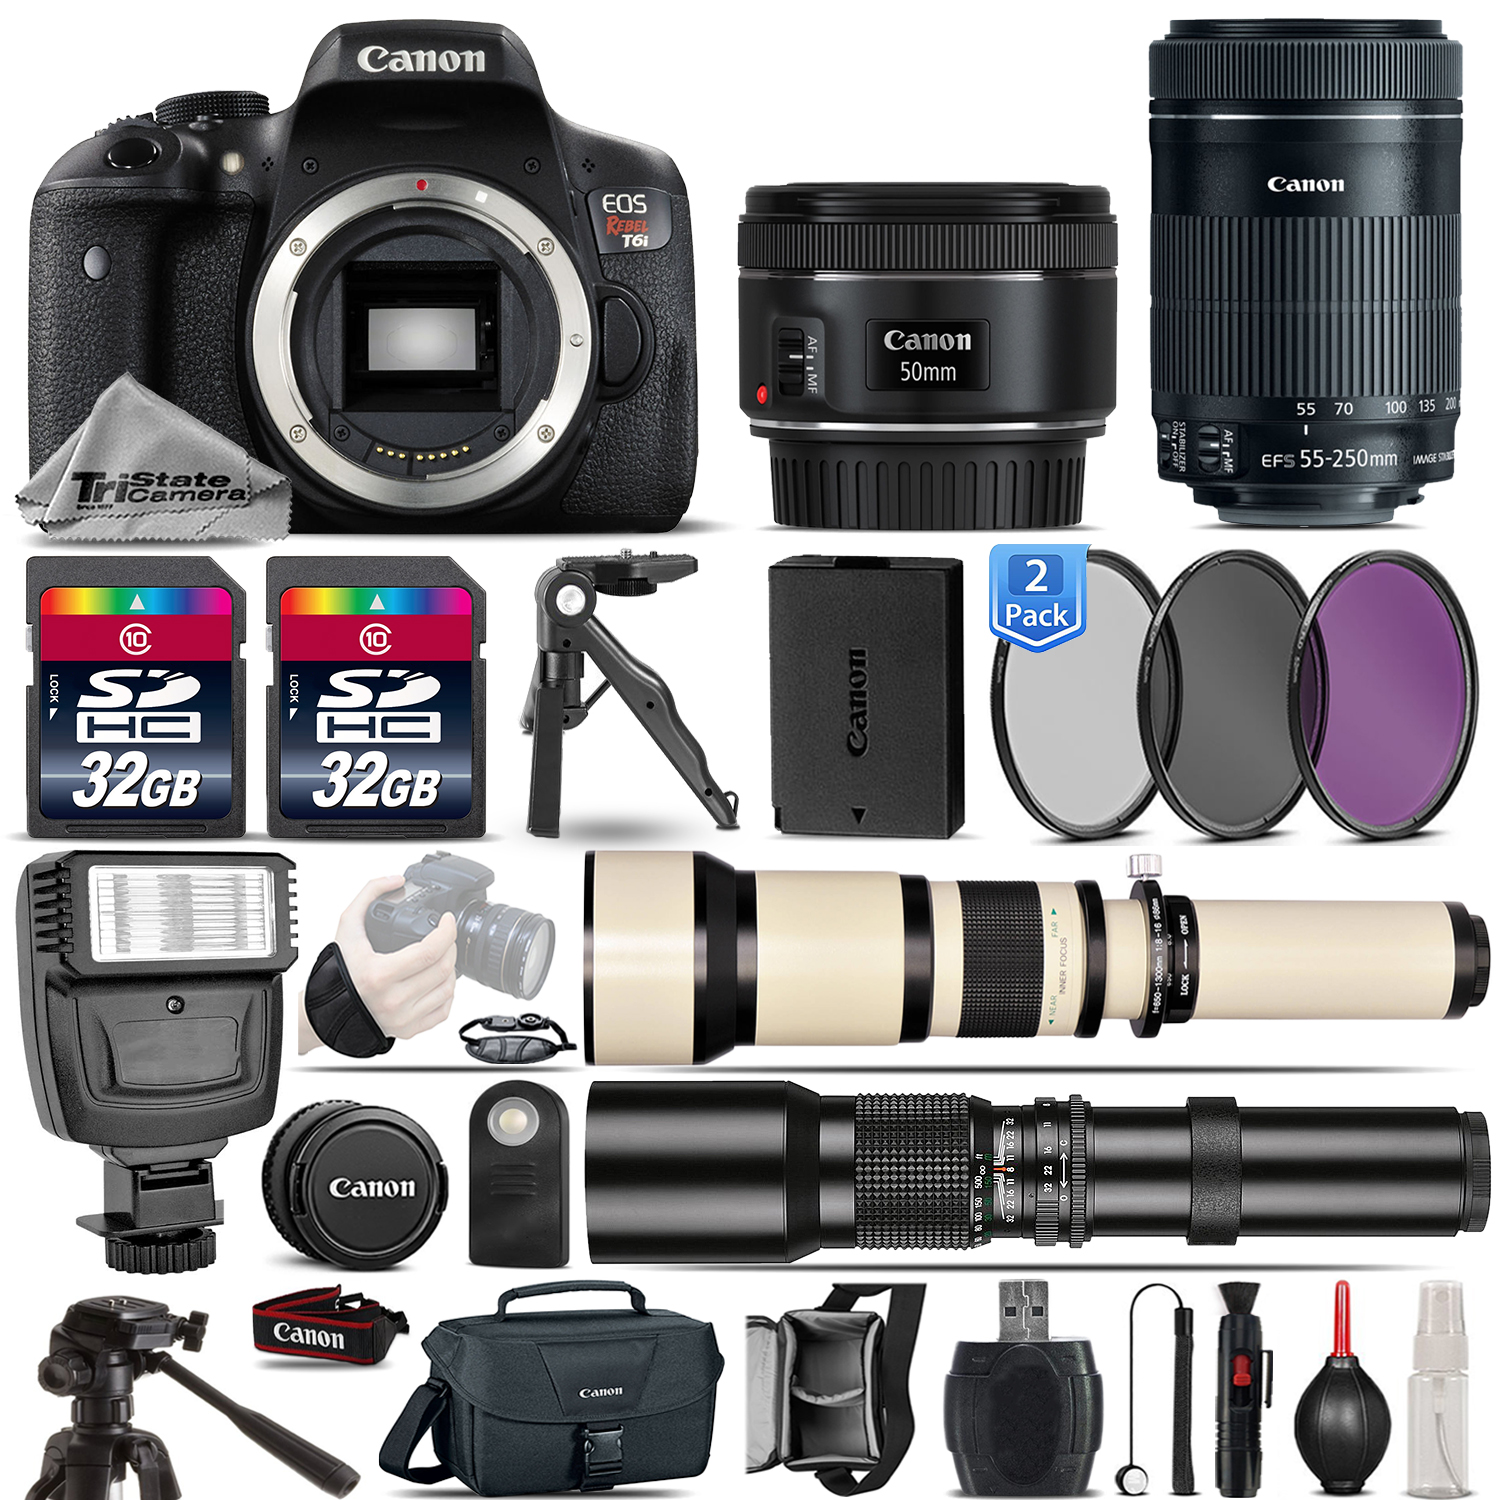 EOS Rebel T6i DSLR Camera + 50mm 1.8 STM + 55-250mm IS STM Lens - 64GB Kit *FREE SHIPPING*